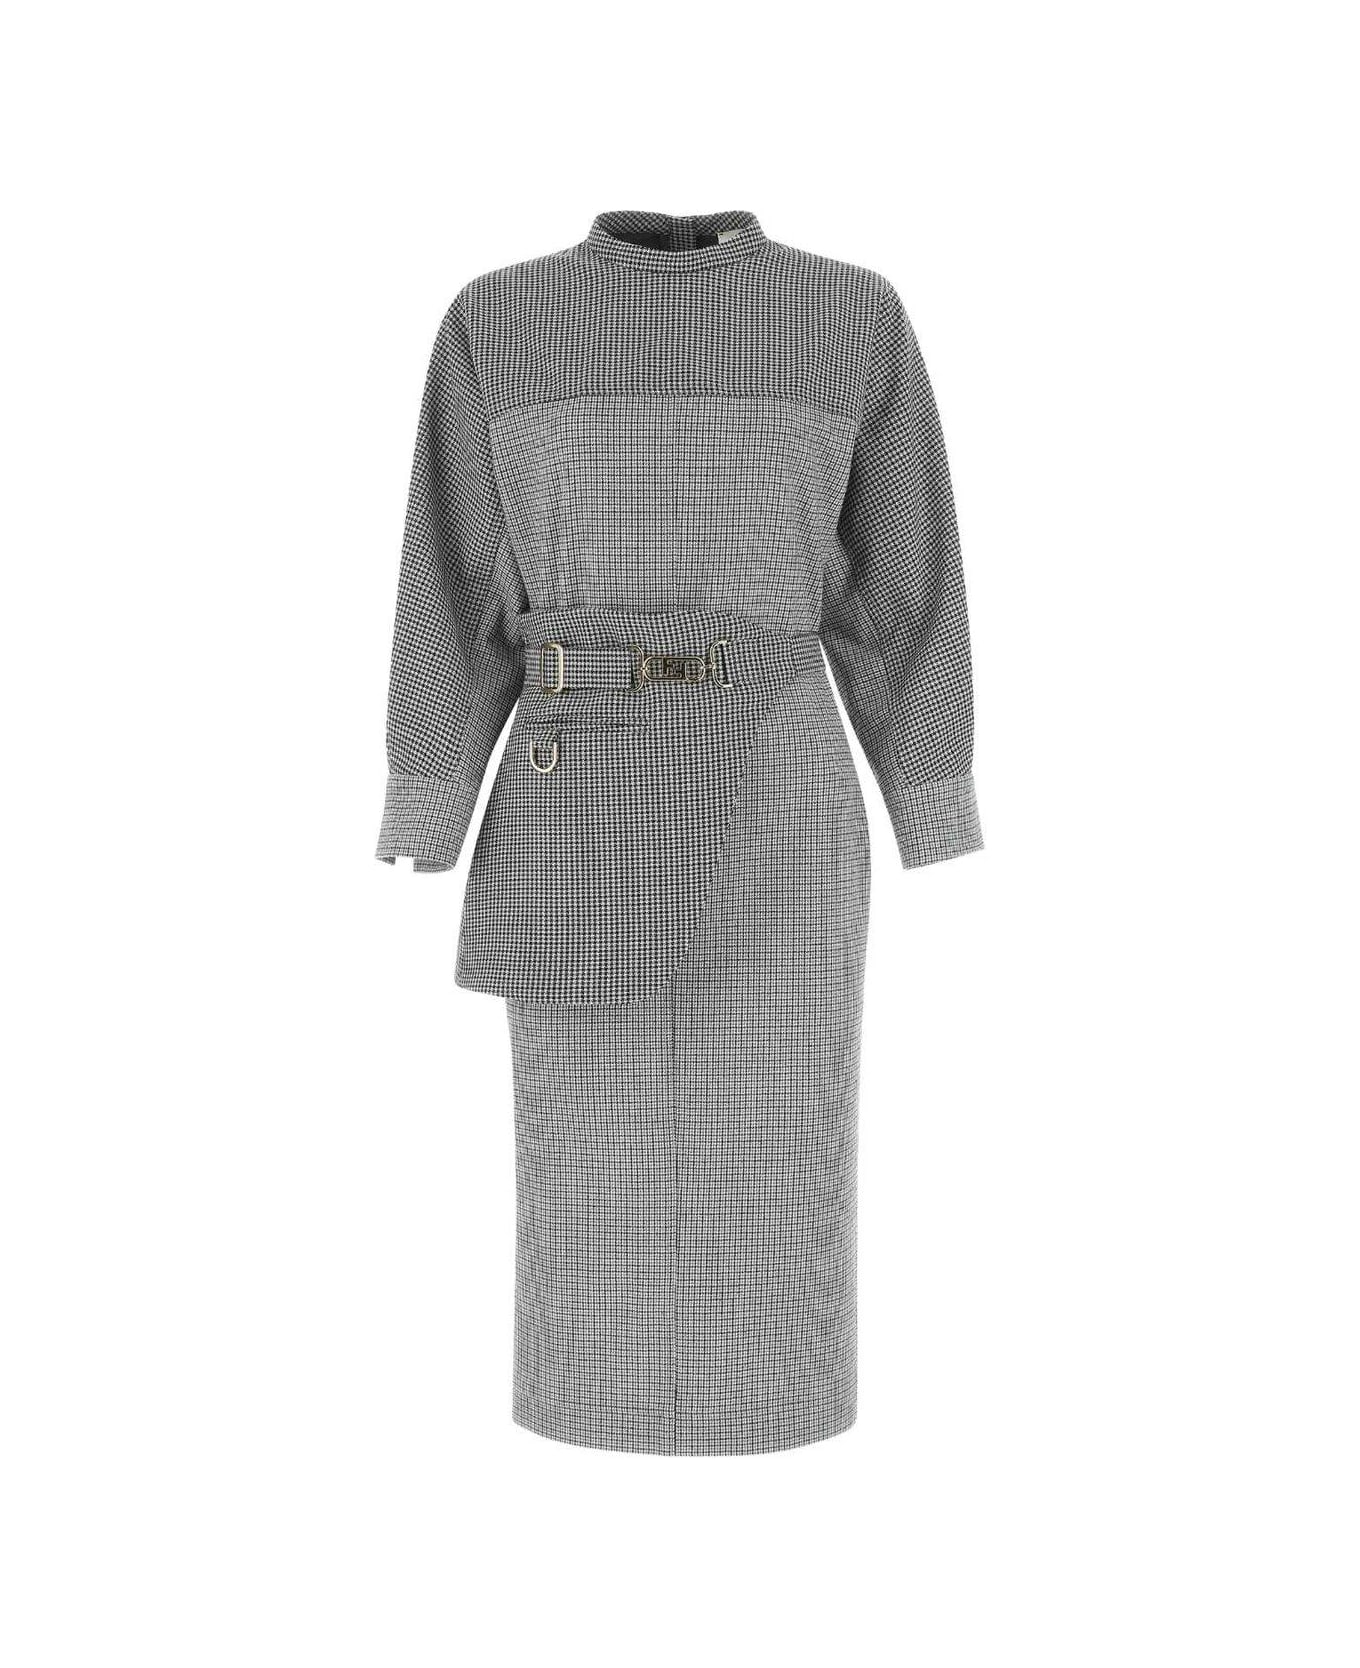 Fendi Houndstooth Patterned Belted Tailored Dress - GREY